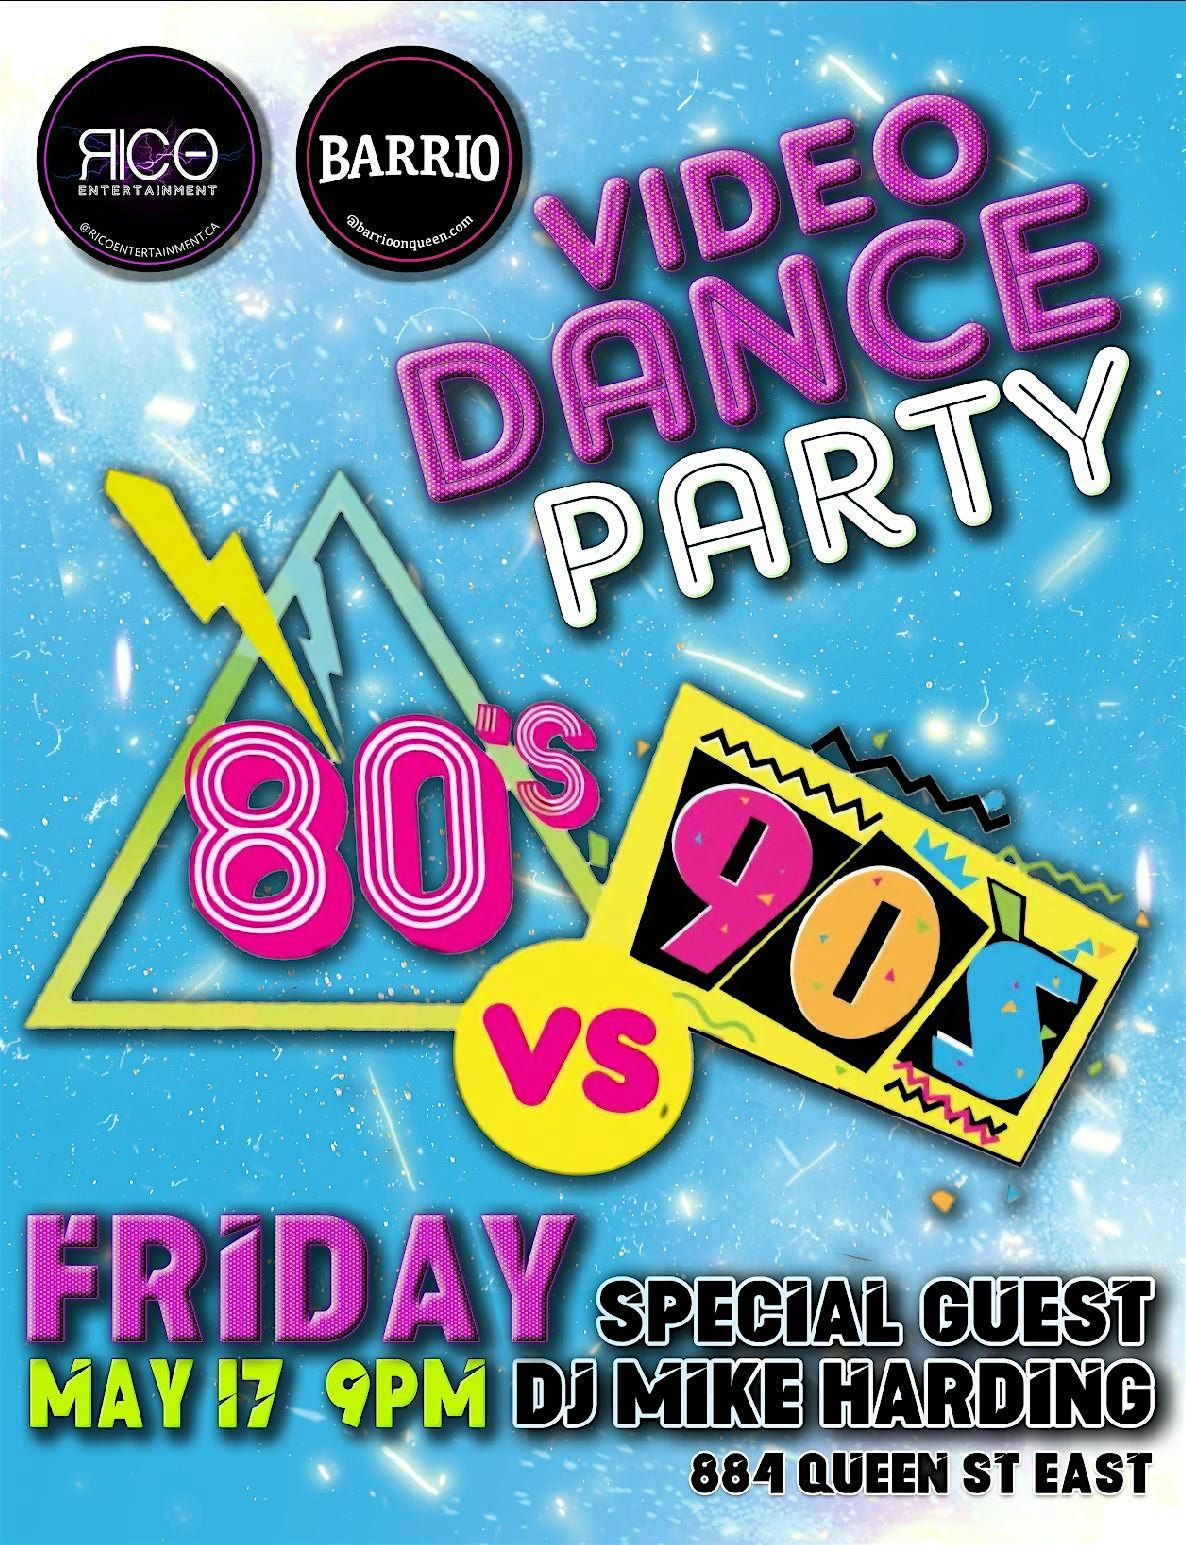 VIDEO DANCE PARTY 80s vs 90s